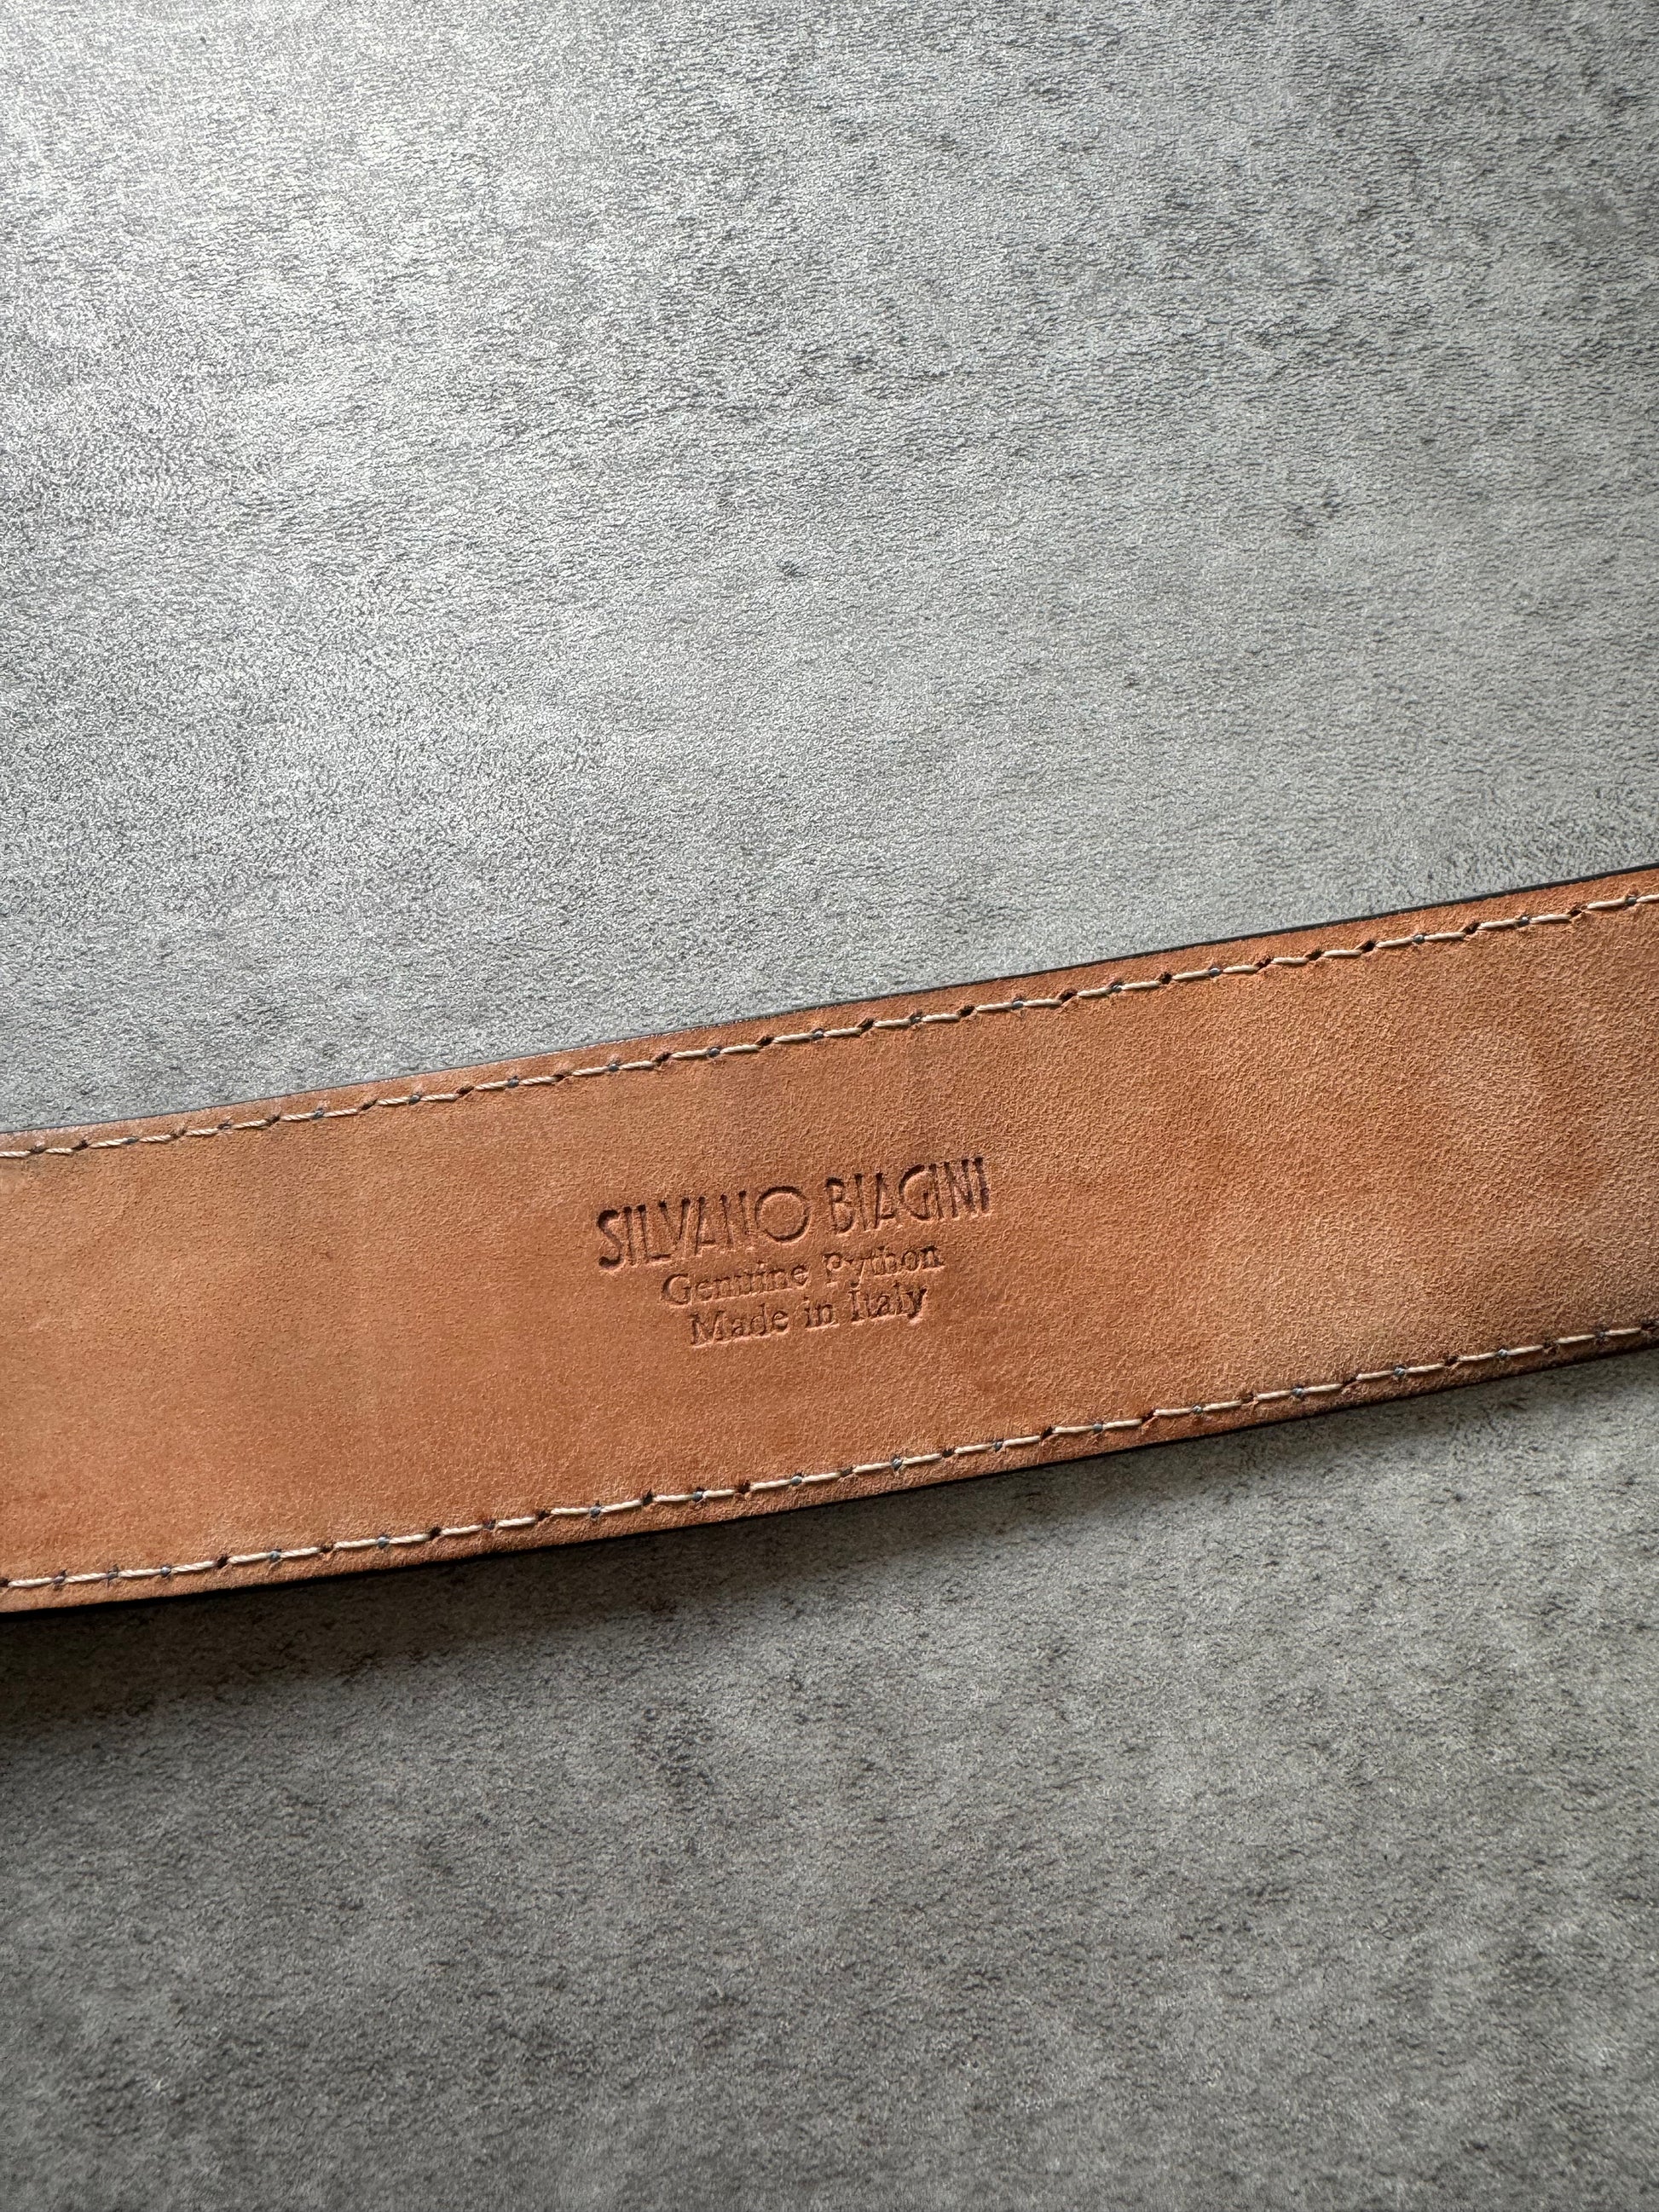 Silvano Biagini Artisanal Italian Genuine Python Leather Belt (OS) - 6